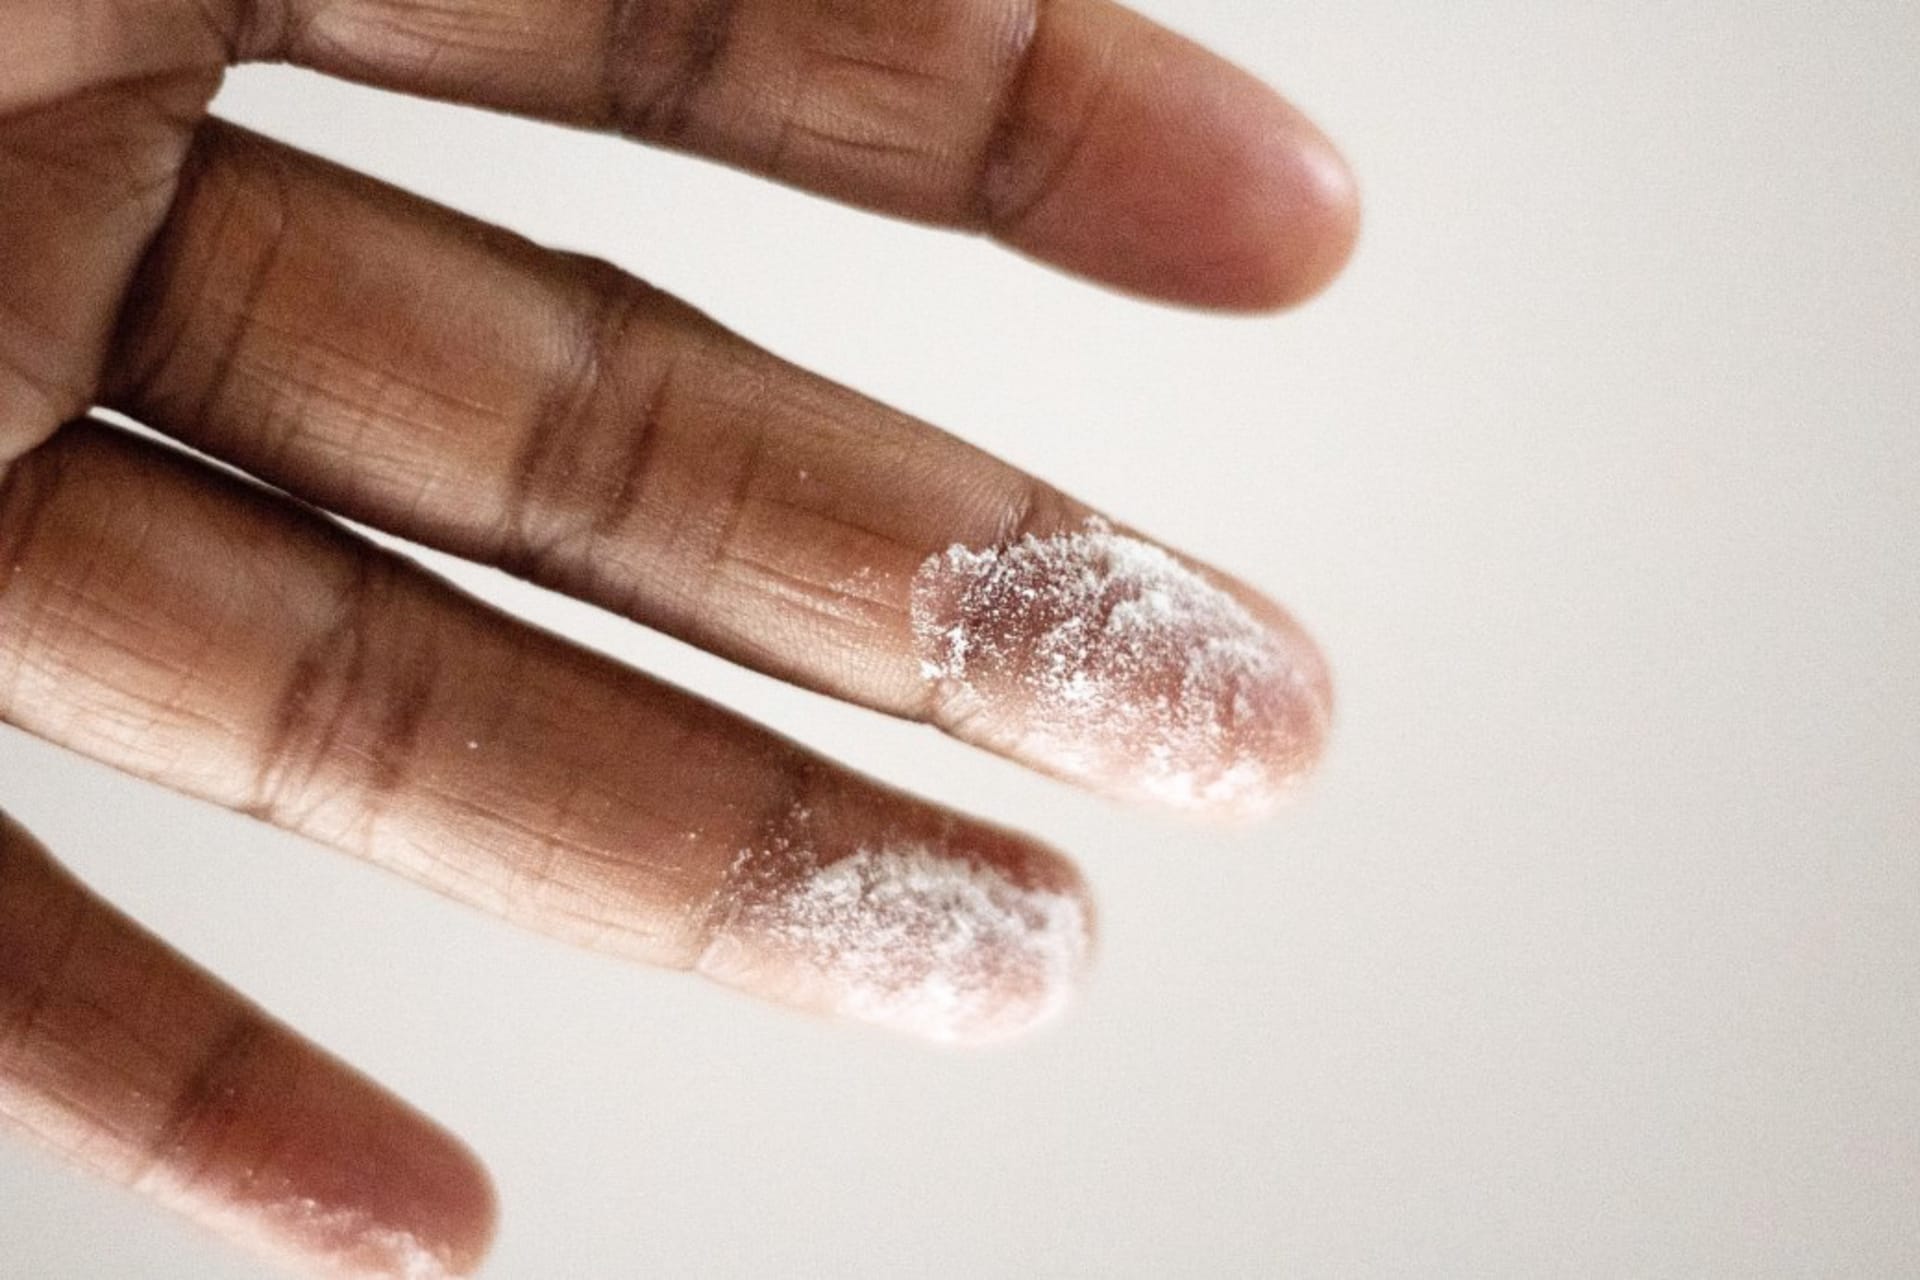 powder on fingers